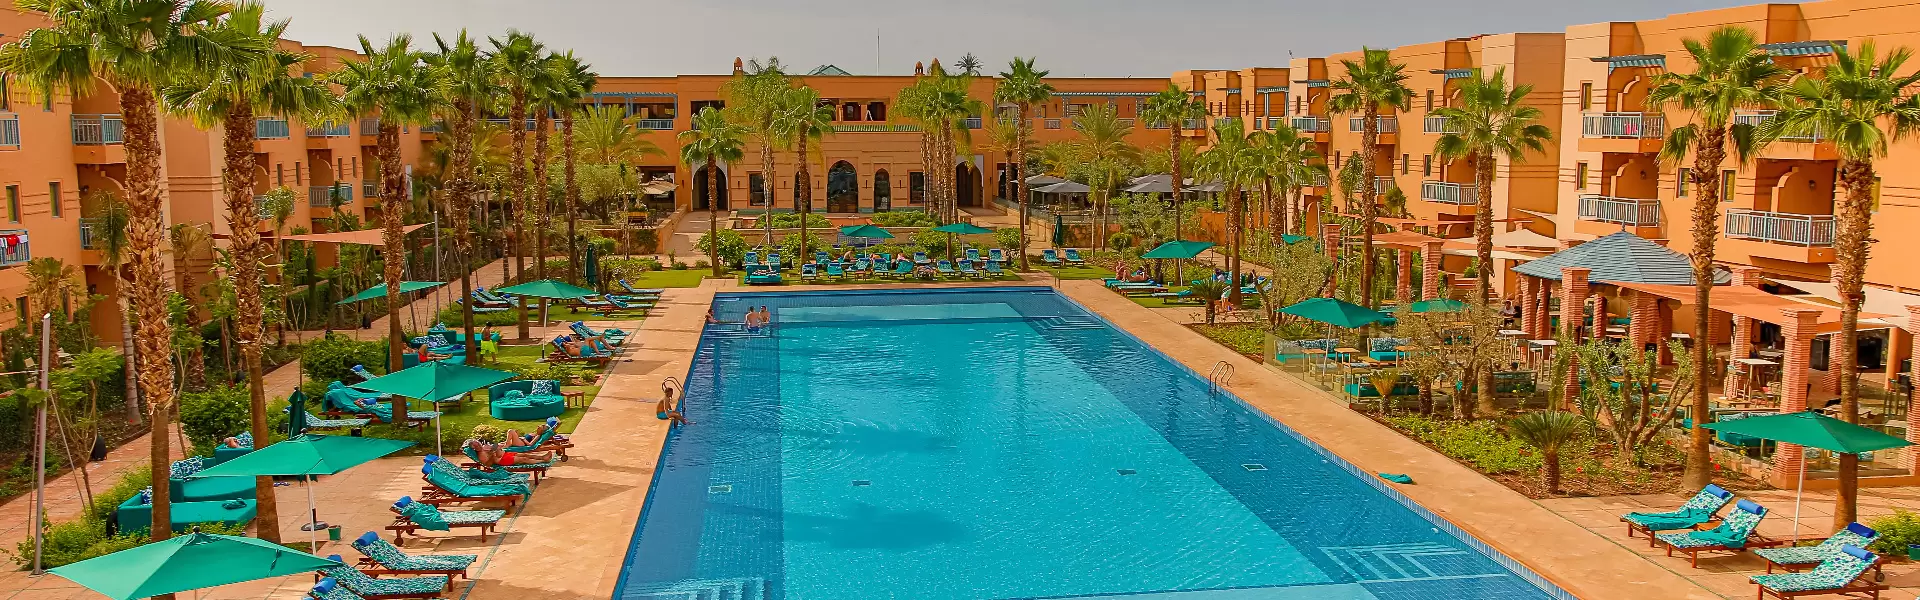 Bilyana Golf-Jaal Riad Resort Marrakech